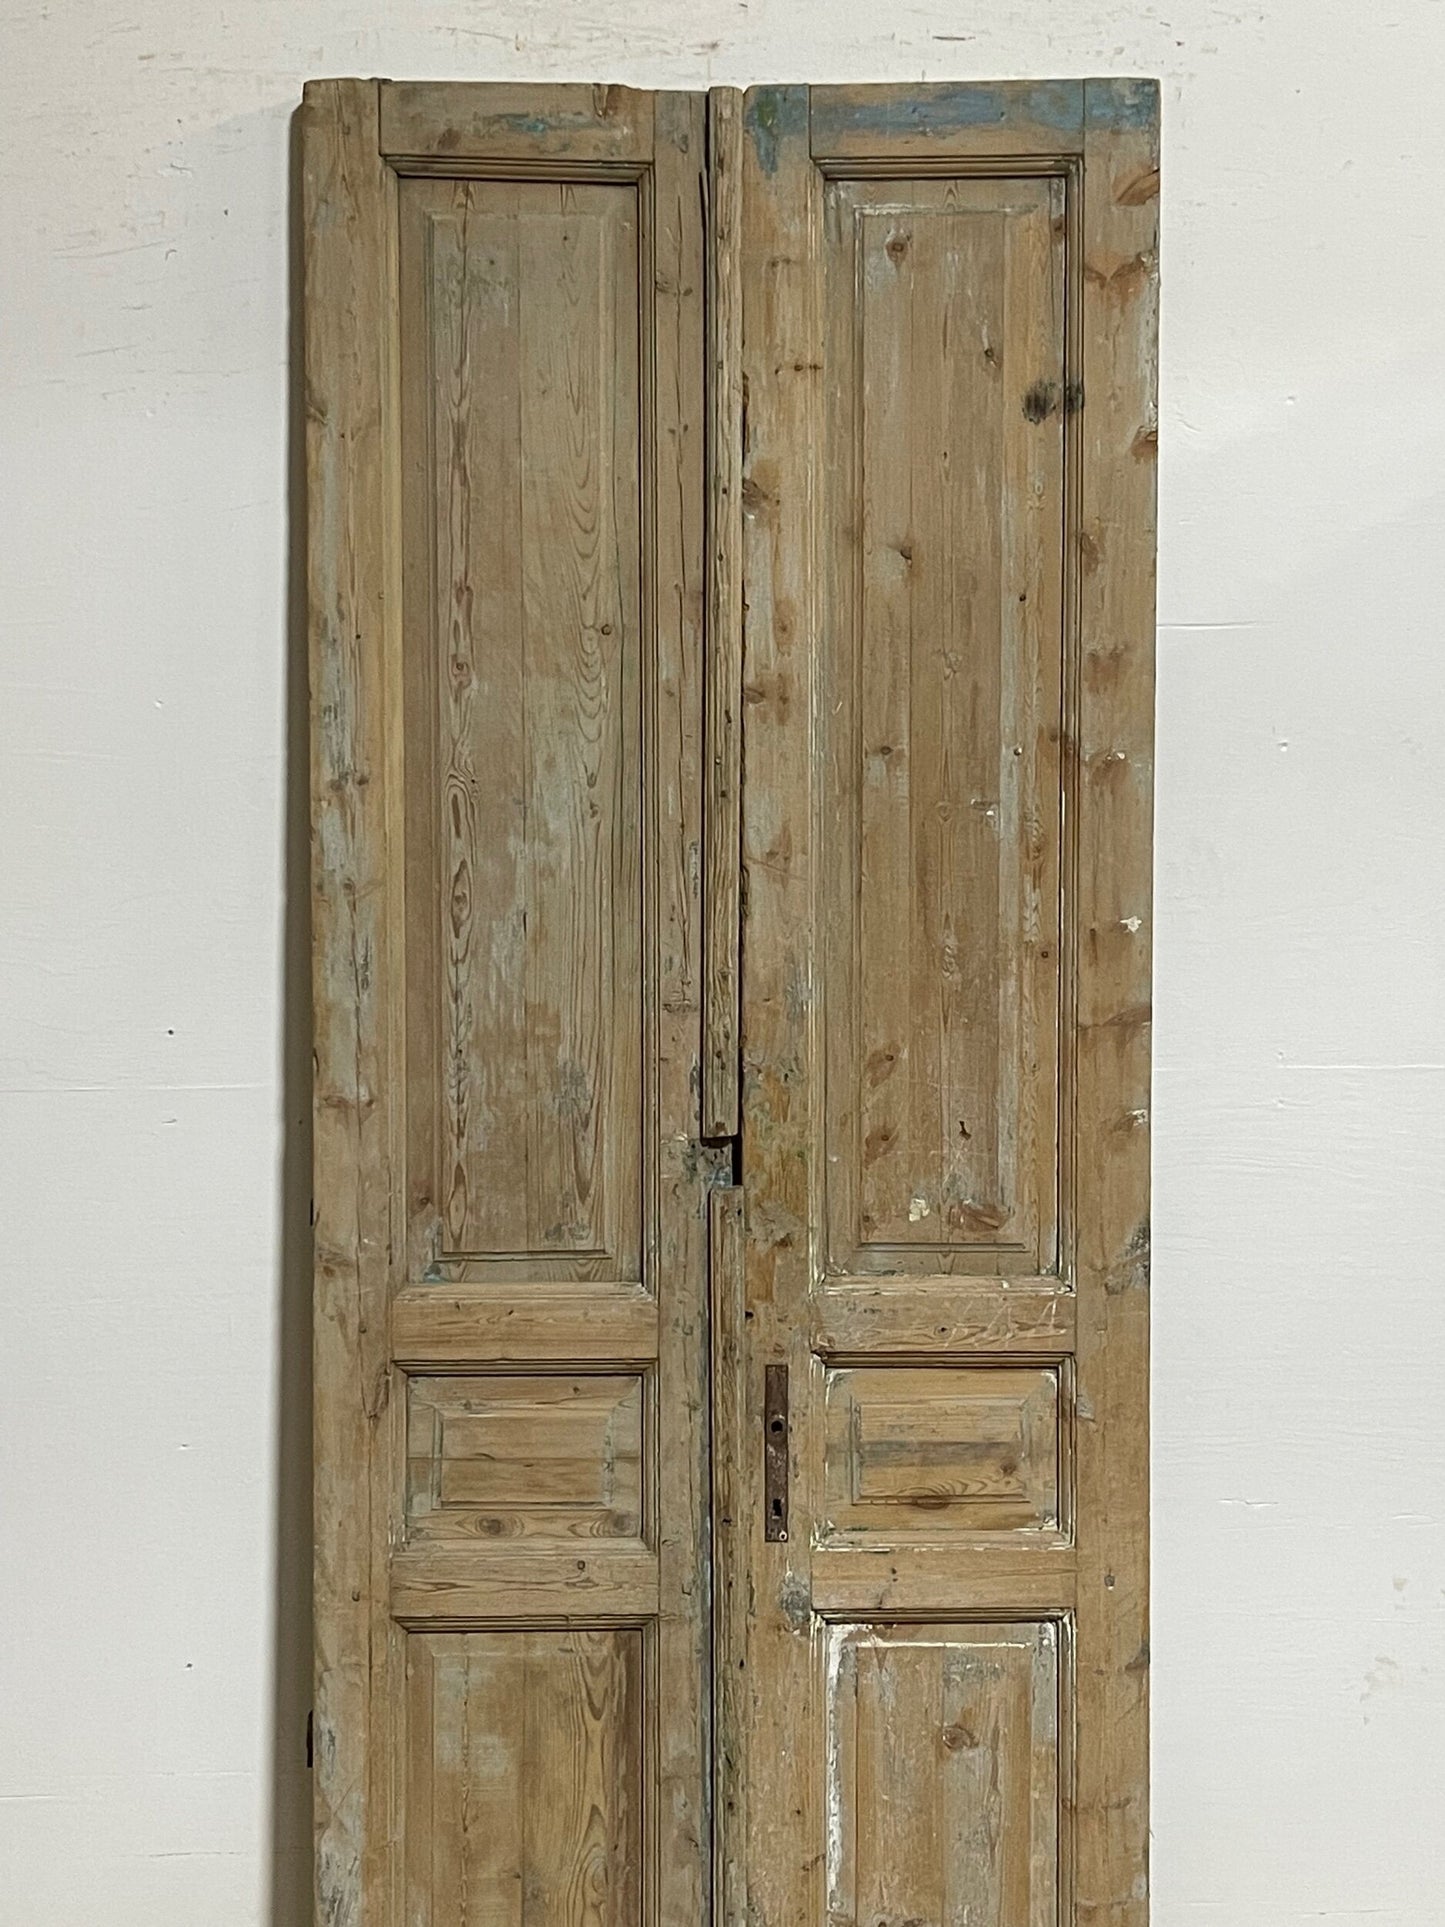 Antique French doors (89.5x35.5) H0203s